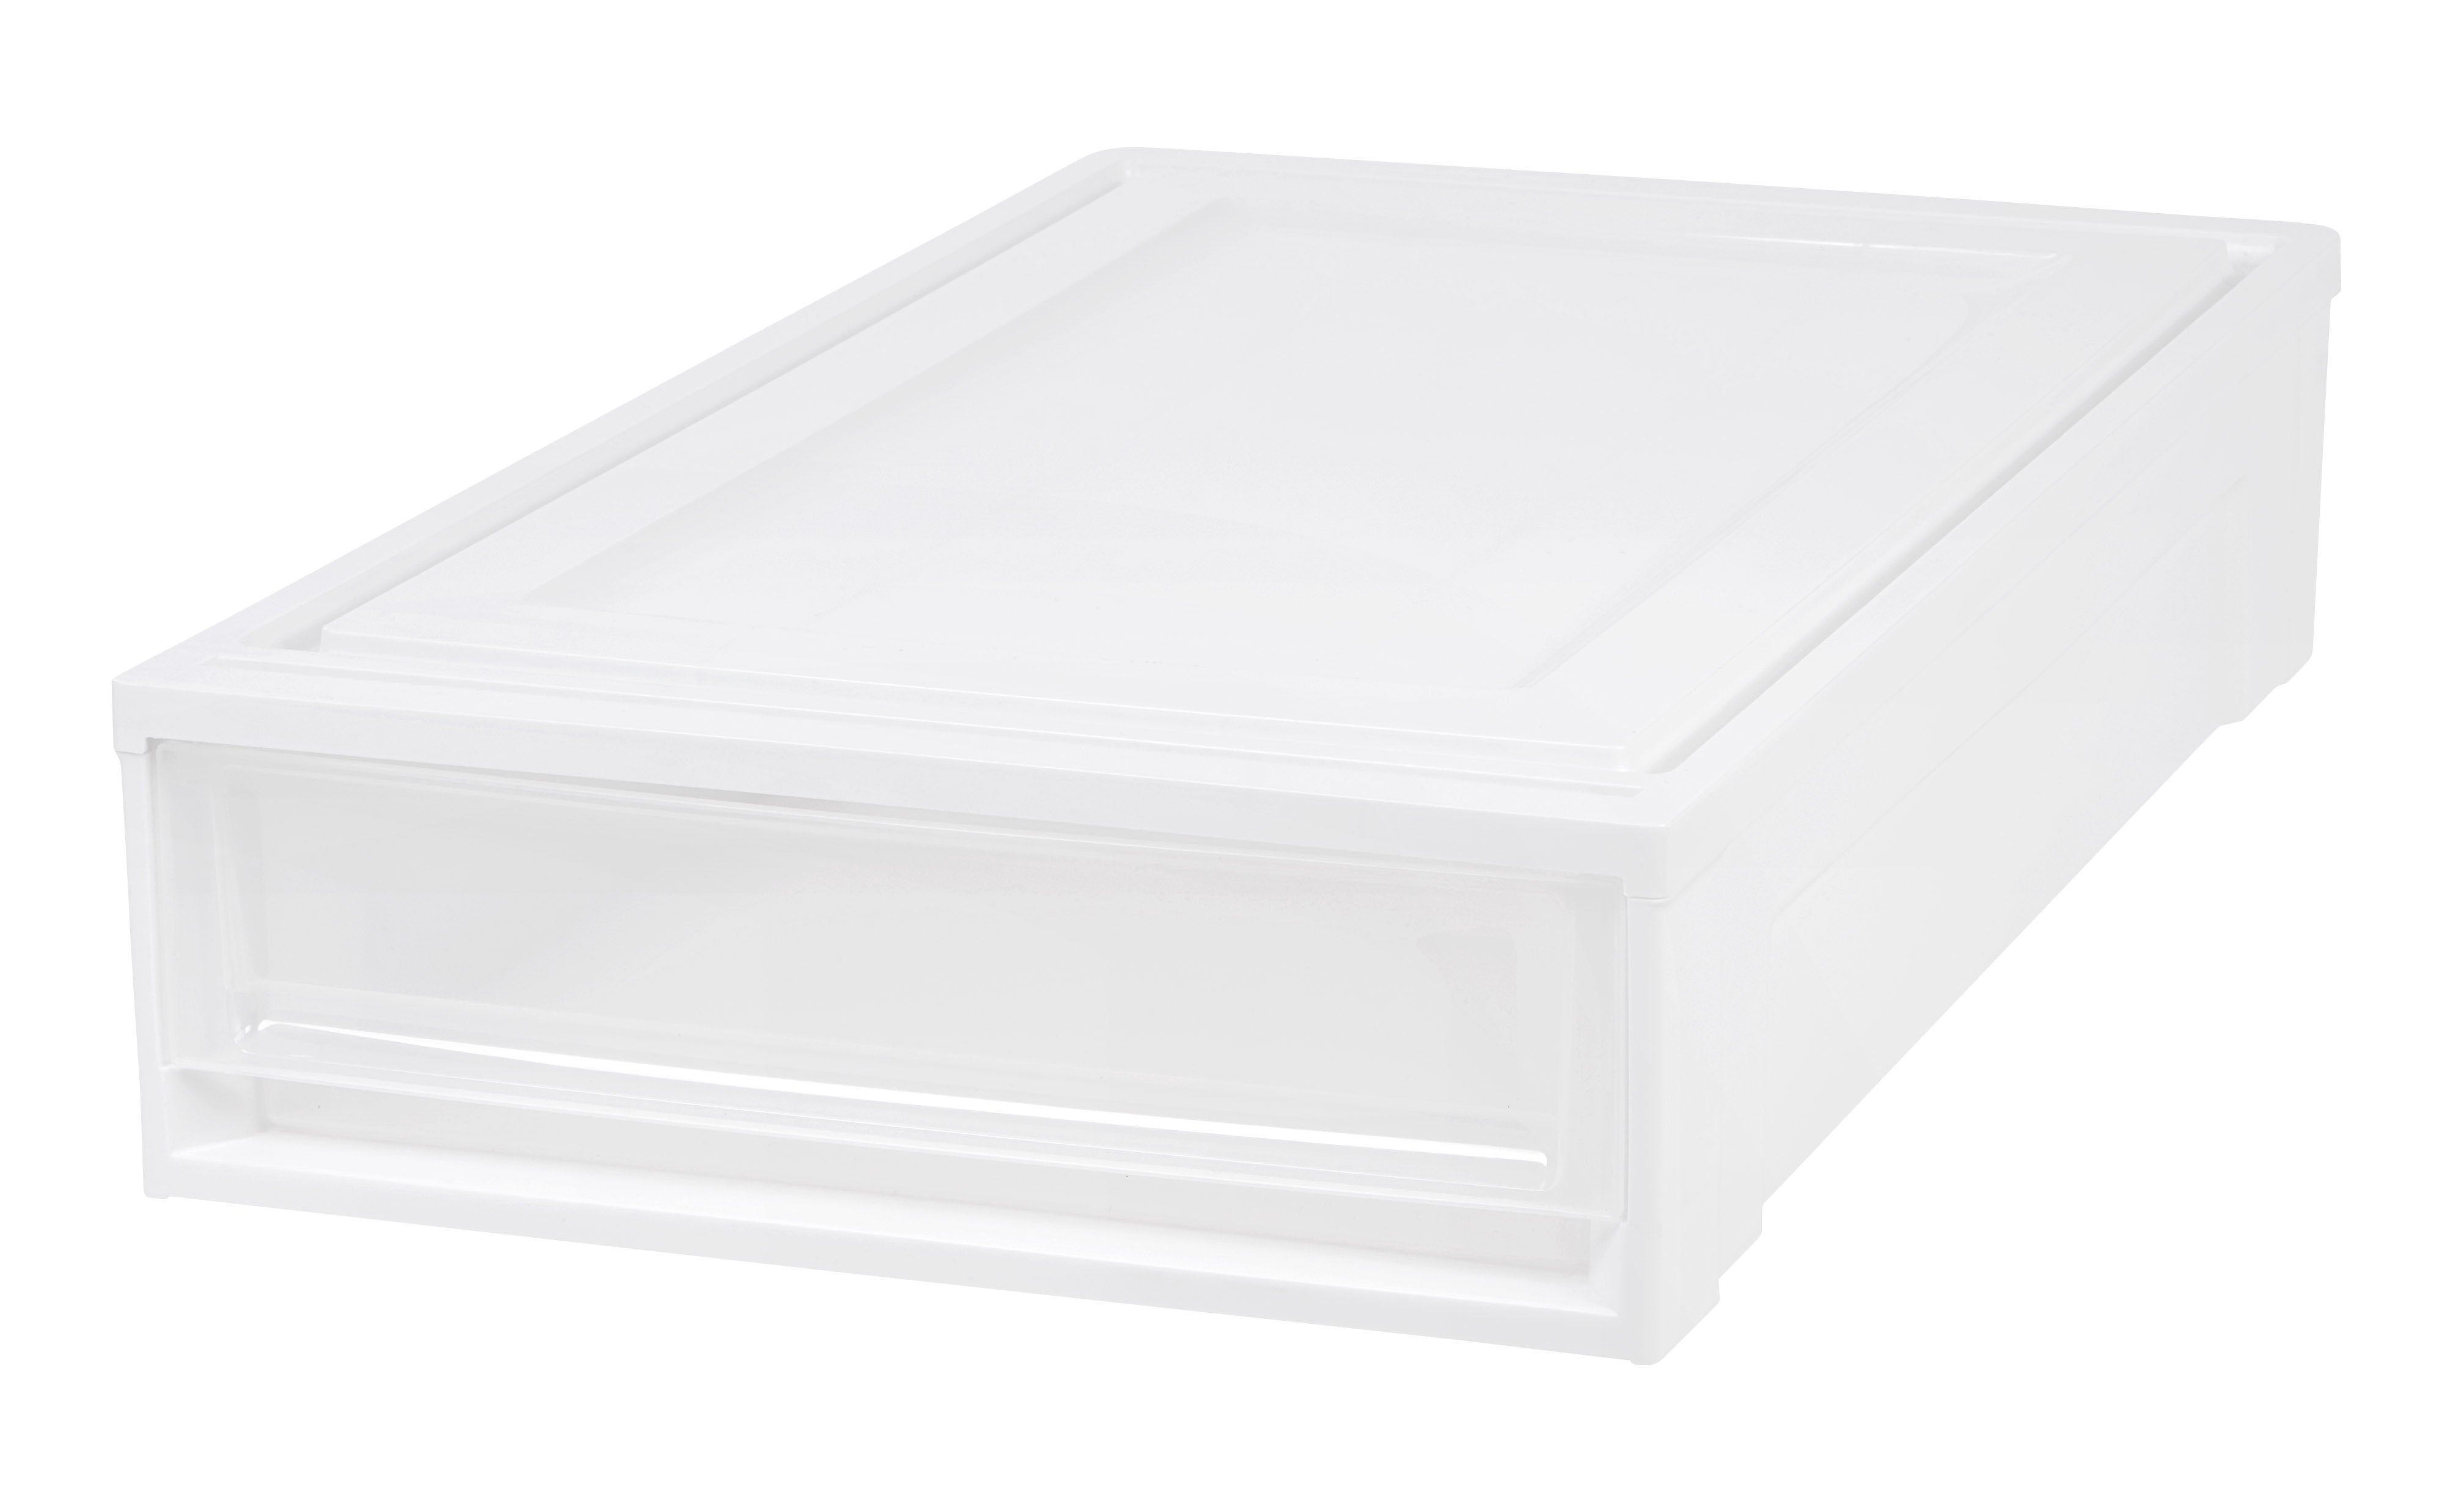 Iris USA 4 Slim Plastic Drawer Storage with Casters, White